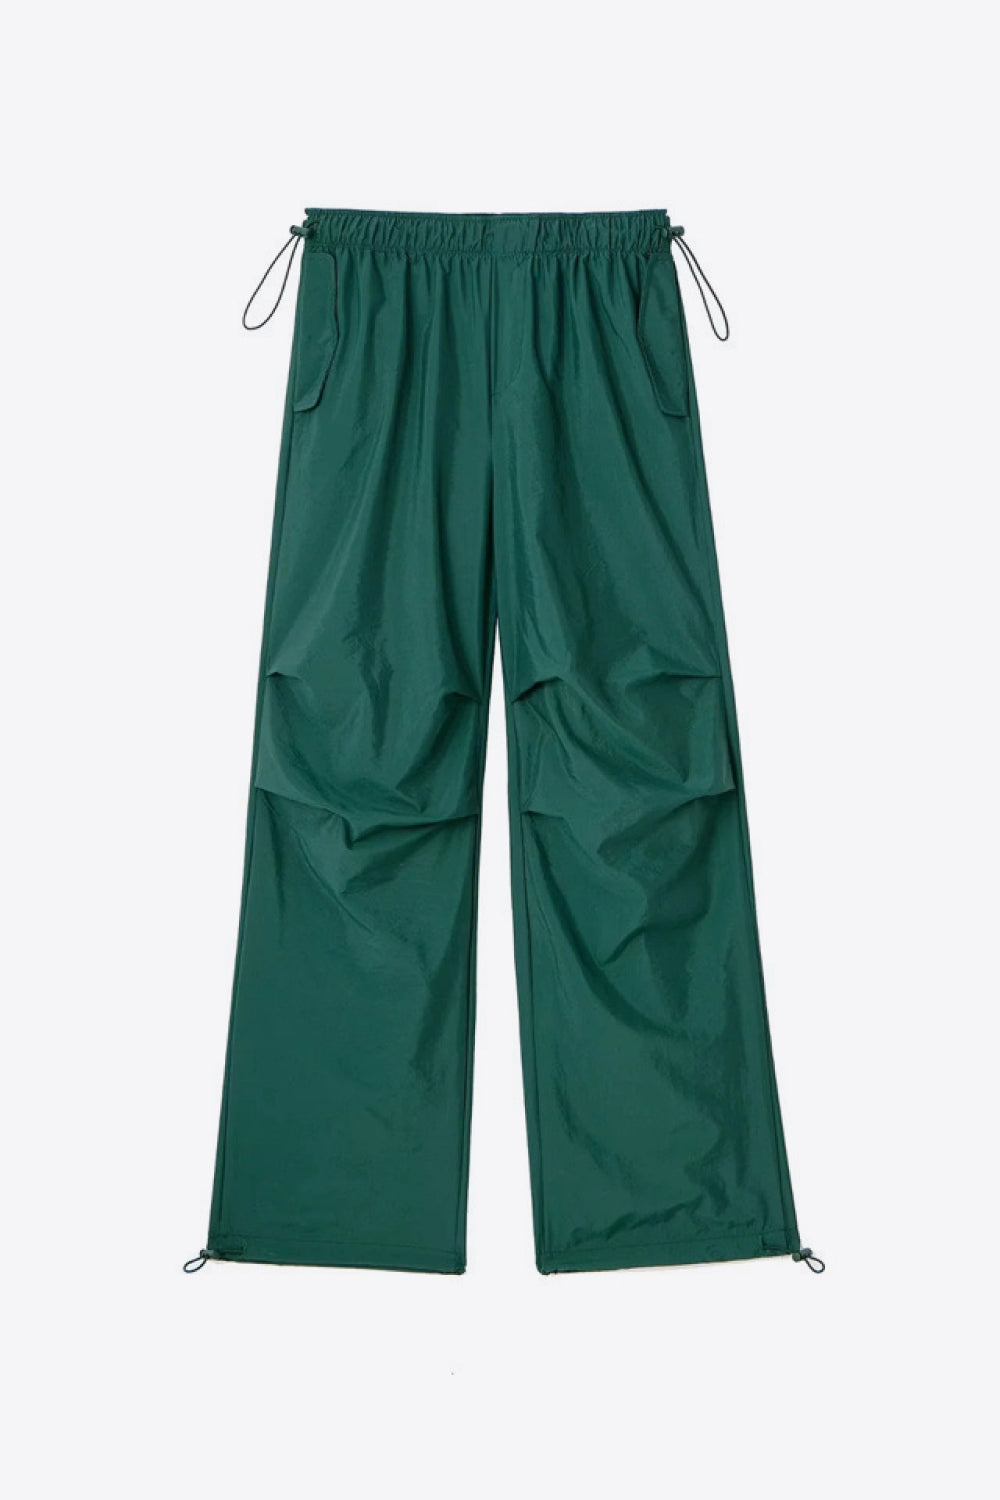 Drawstring Waist Pants with Pockets - Green / XS - Bottoms - Pants - 12 - 2024